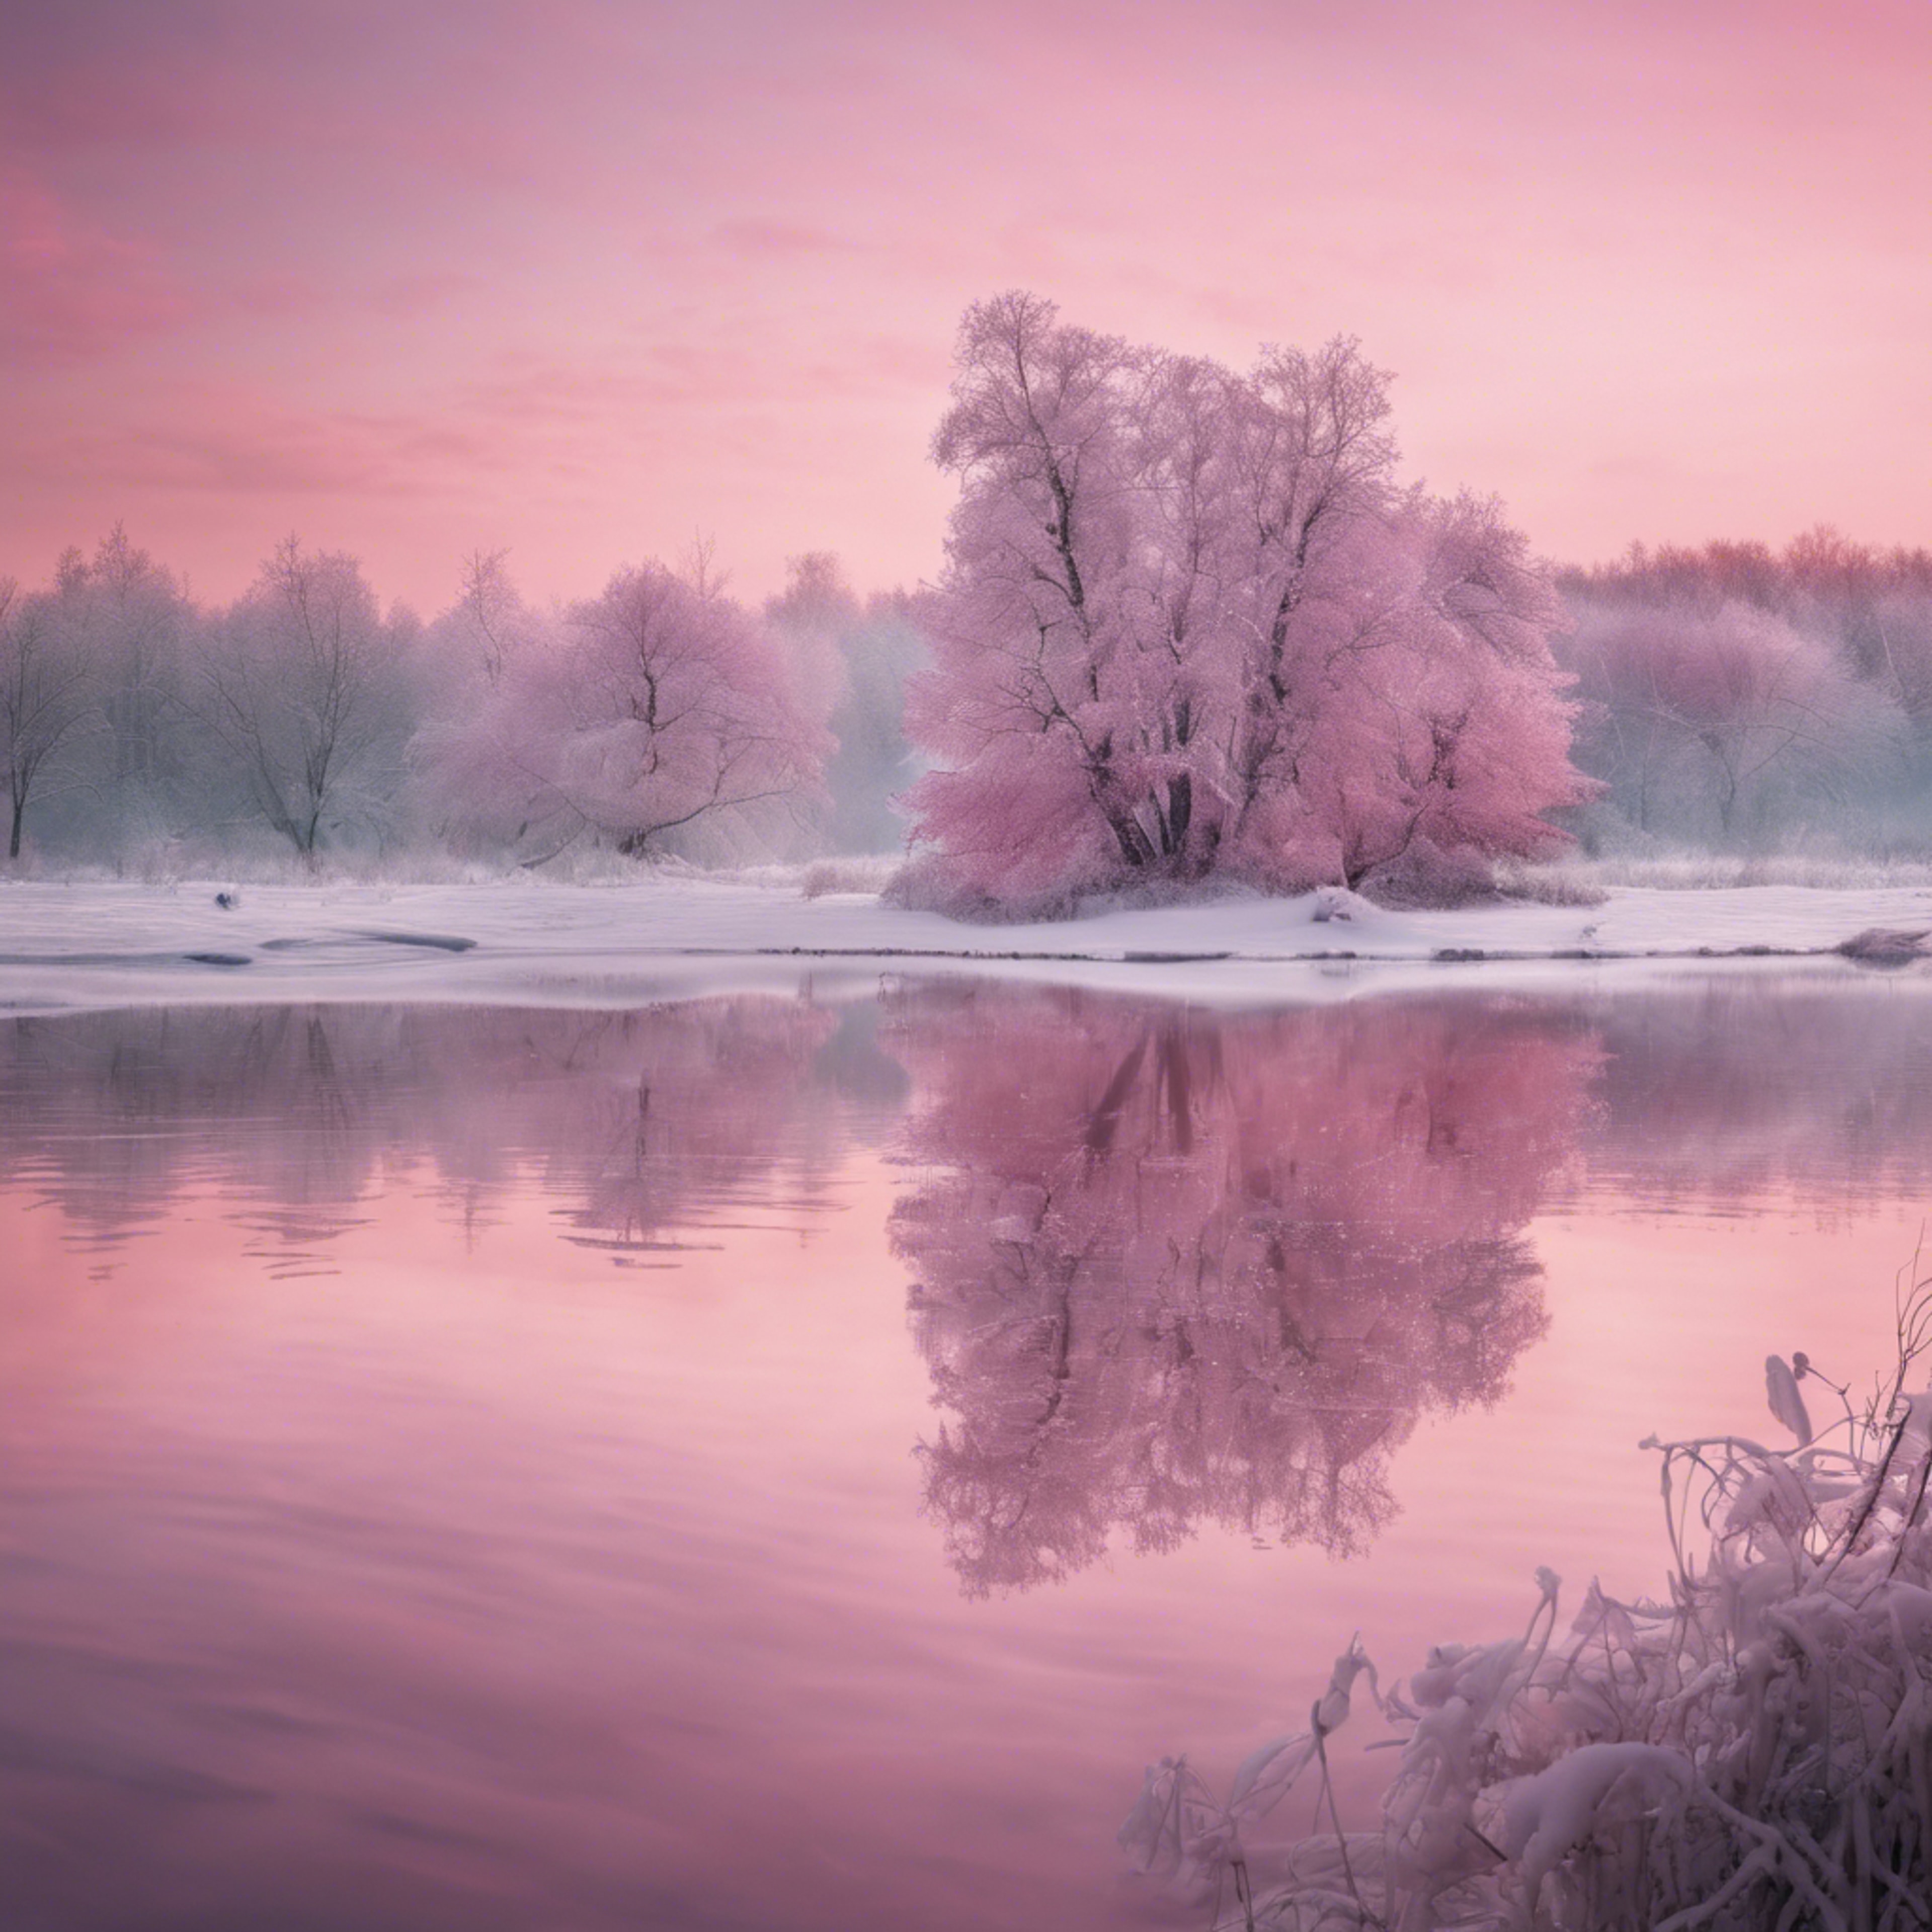 A tranquil pink Christmas morning landscape, reflections on a still frozen lake. Tapeta[99be3b4566ac4908b7ca]